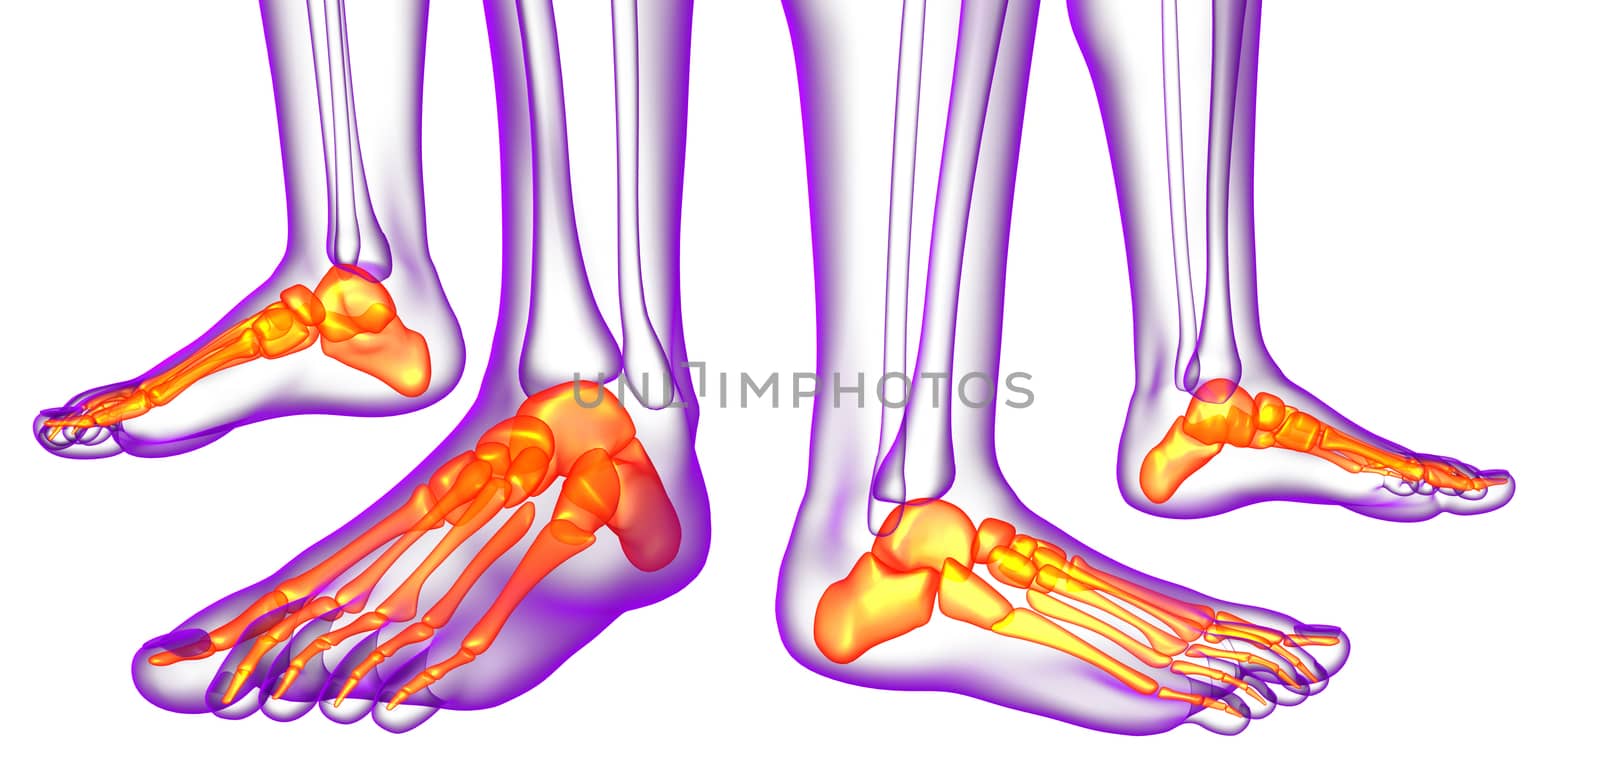 3d rendering medical illustration of the feet bone 